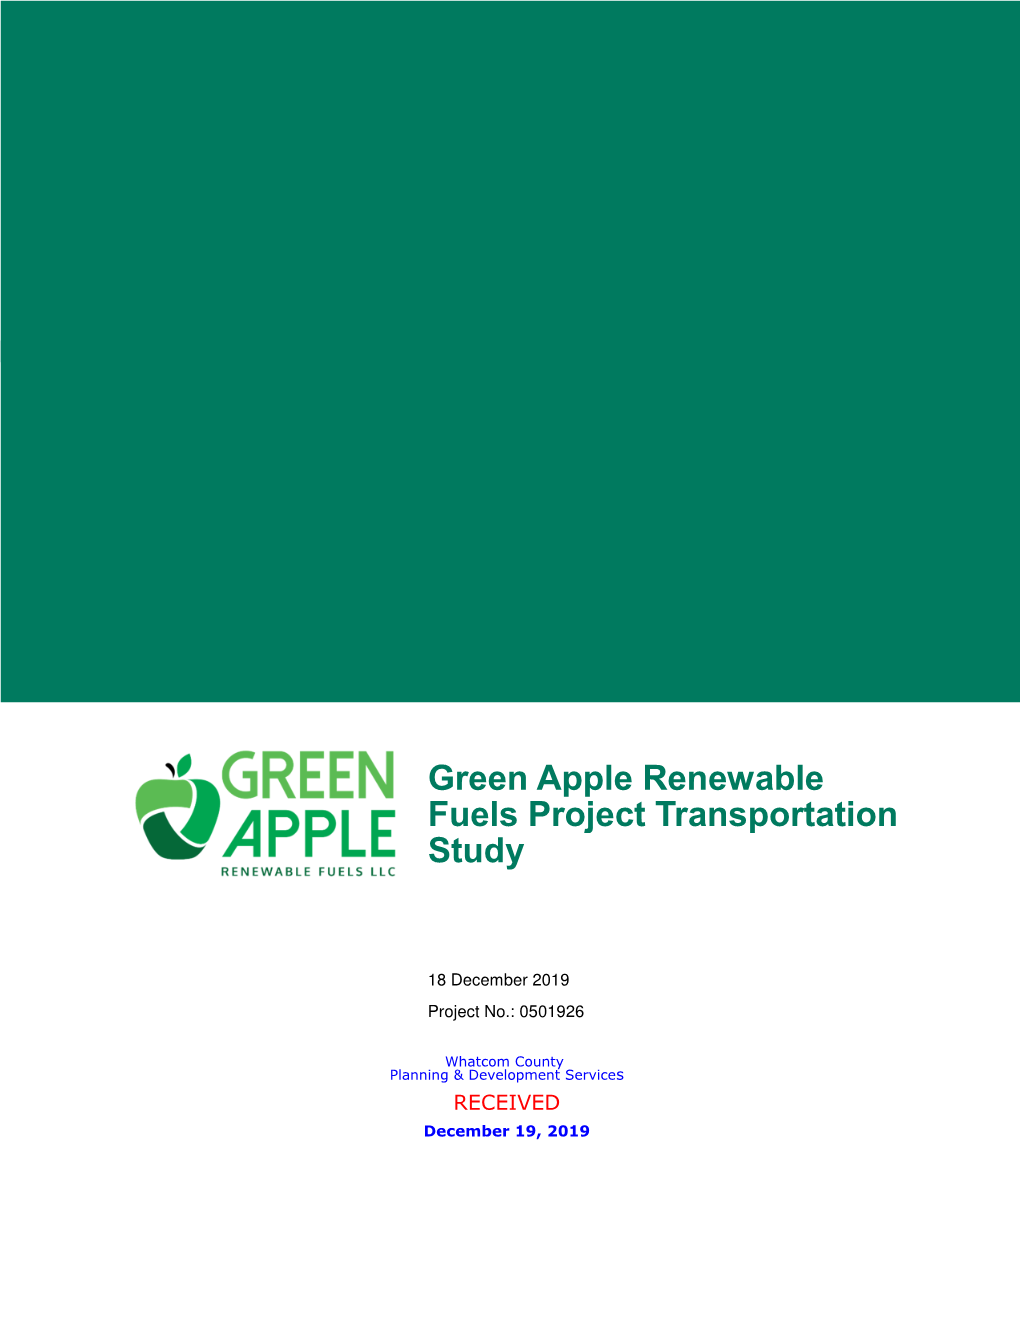 Green Apple Renewable Fuels Project Transportation Study